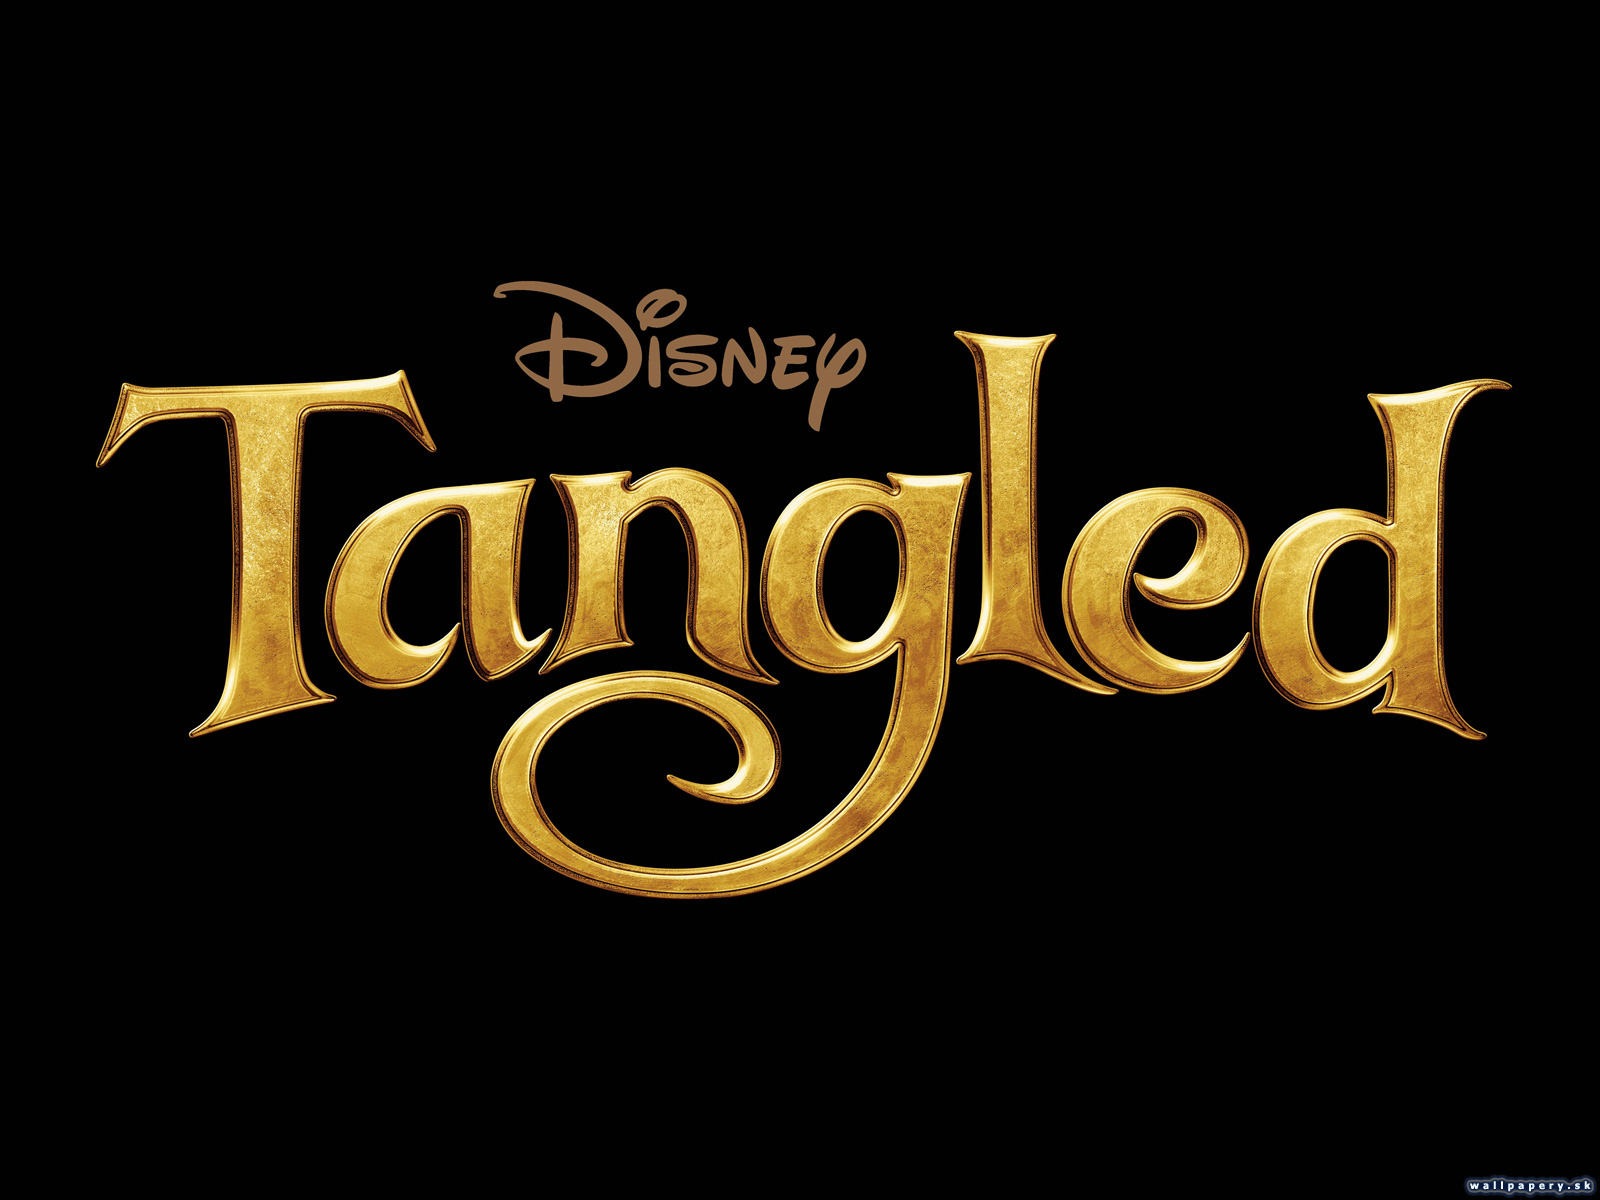 Disney Tangled: The Video Game - wallpaper 13